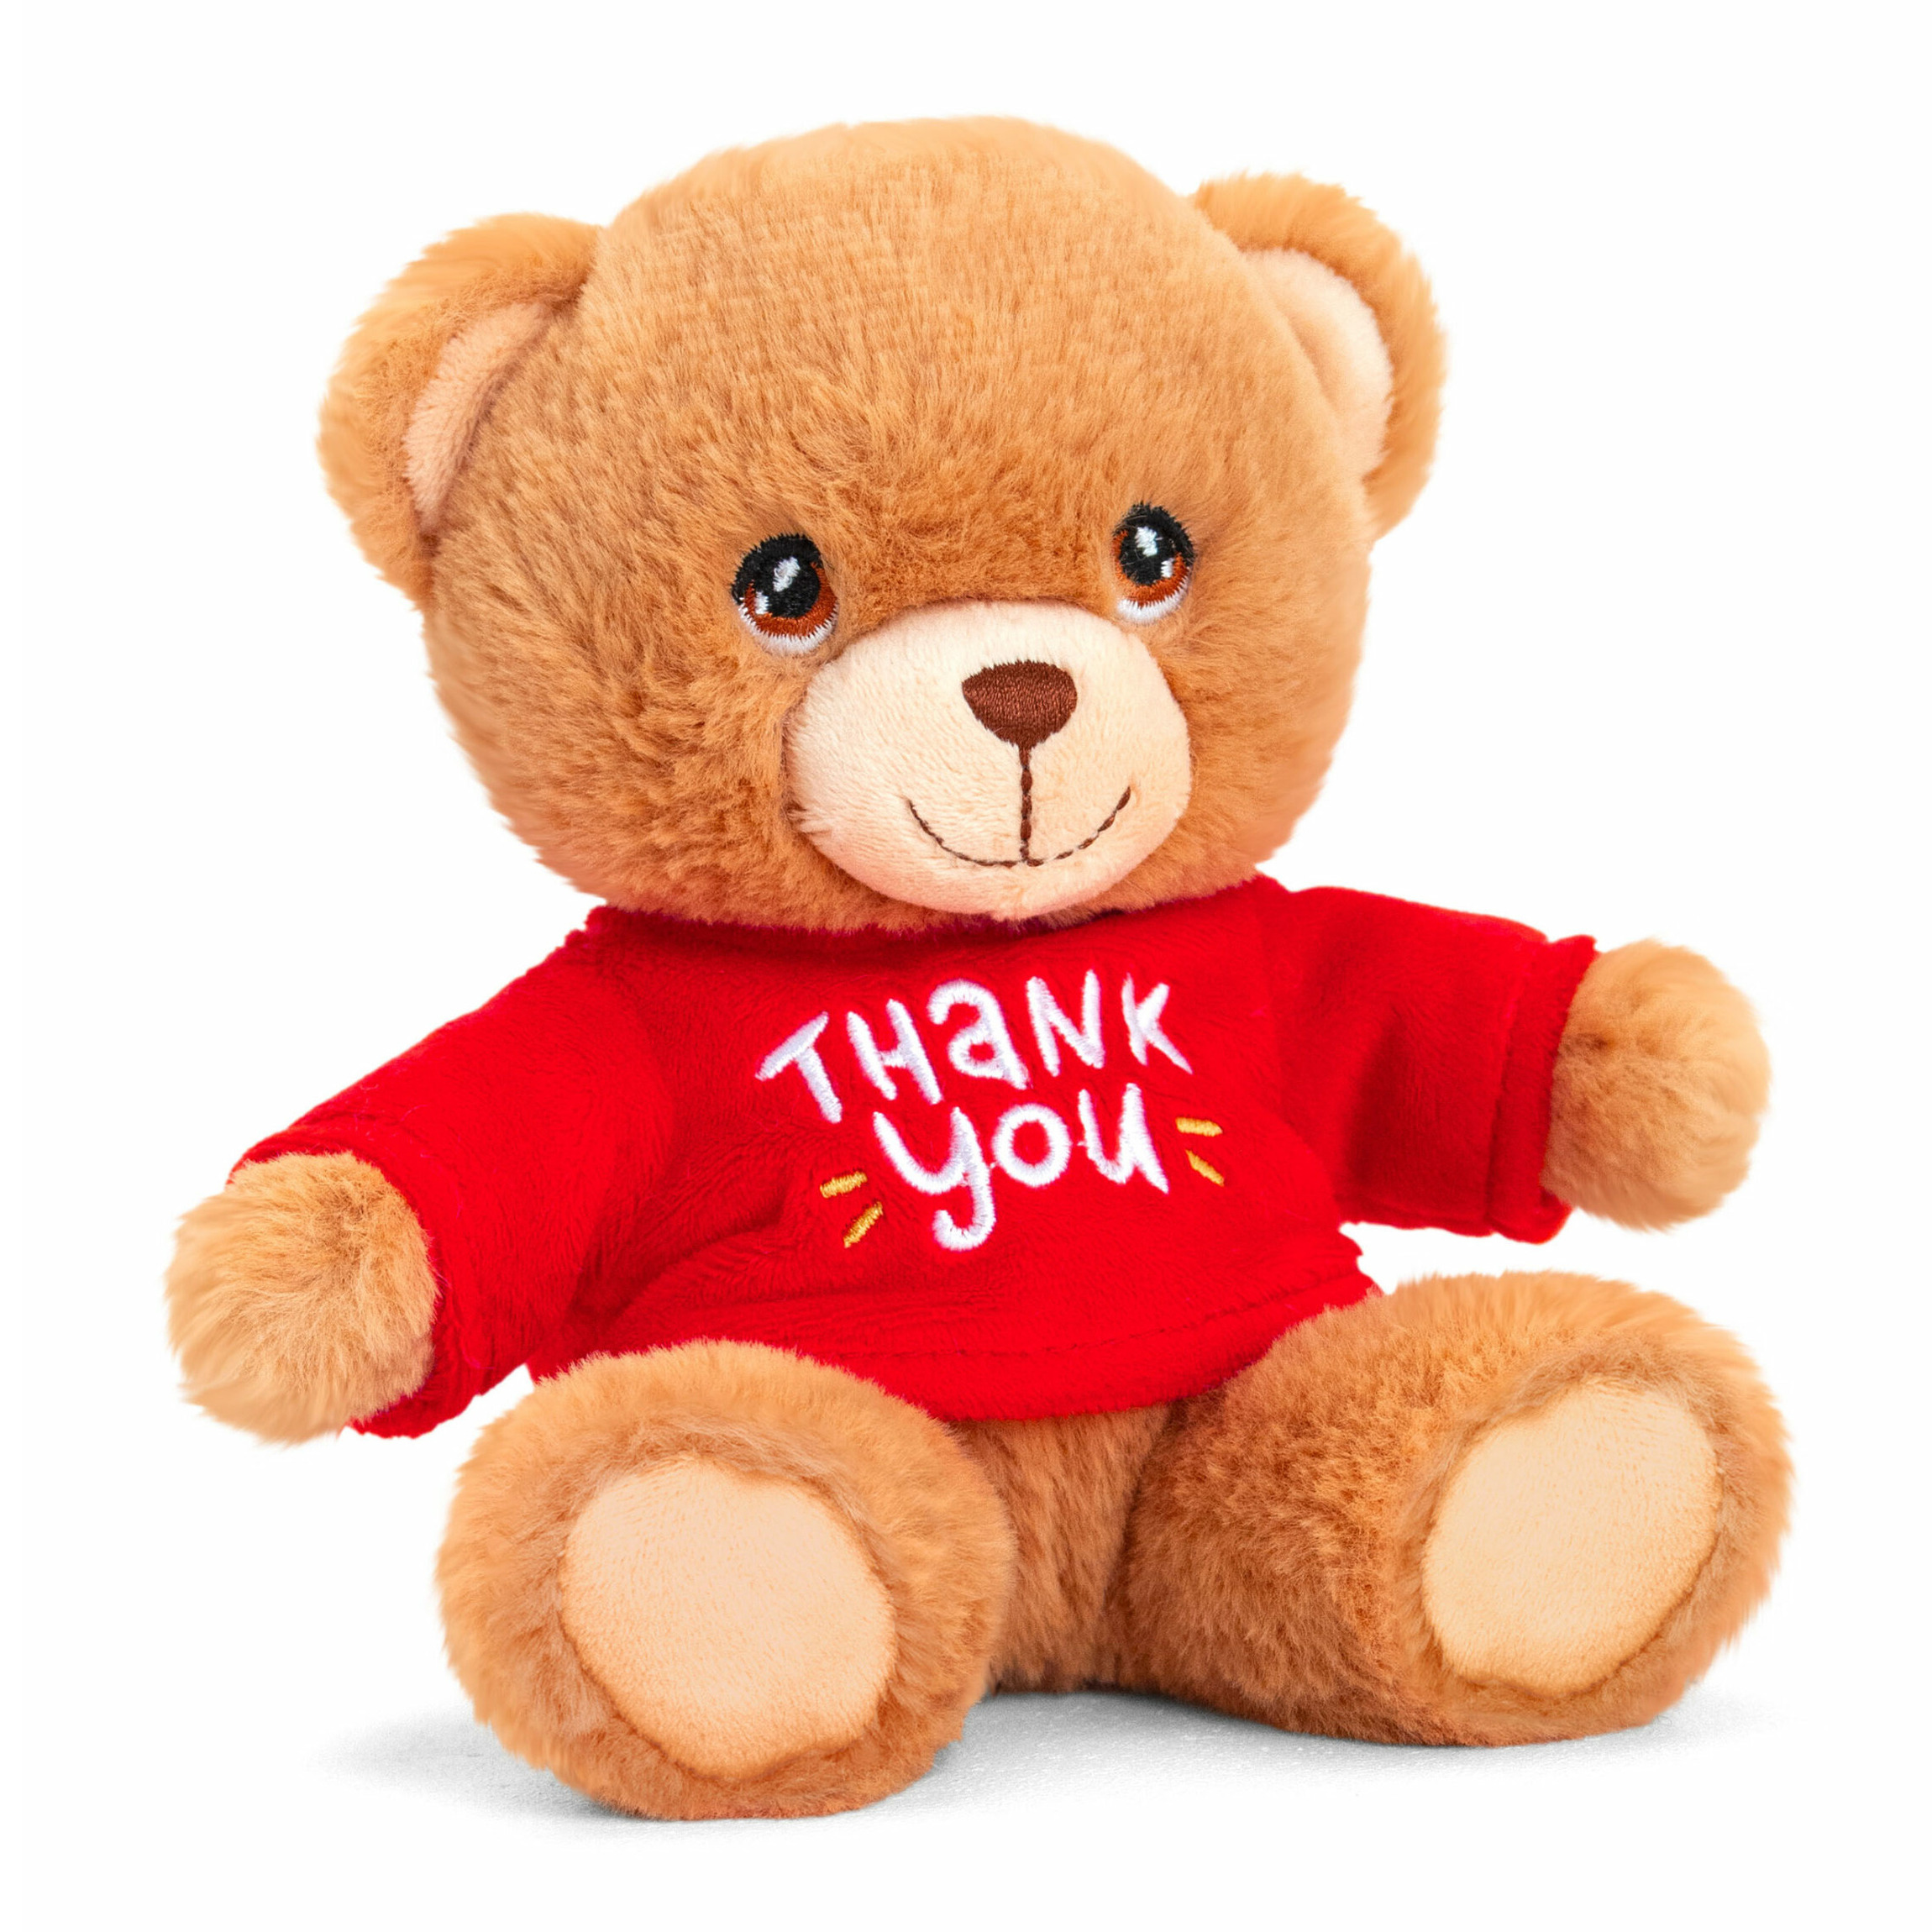 Keel Toys pluche beer knuffel Thank You met rood shirt 14 cm Top Merken Winkel